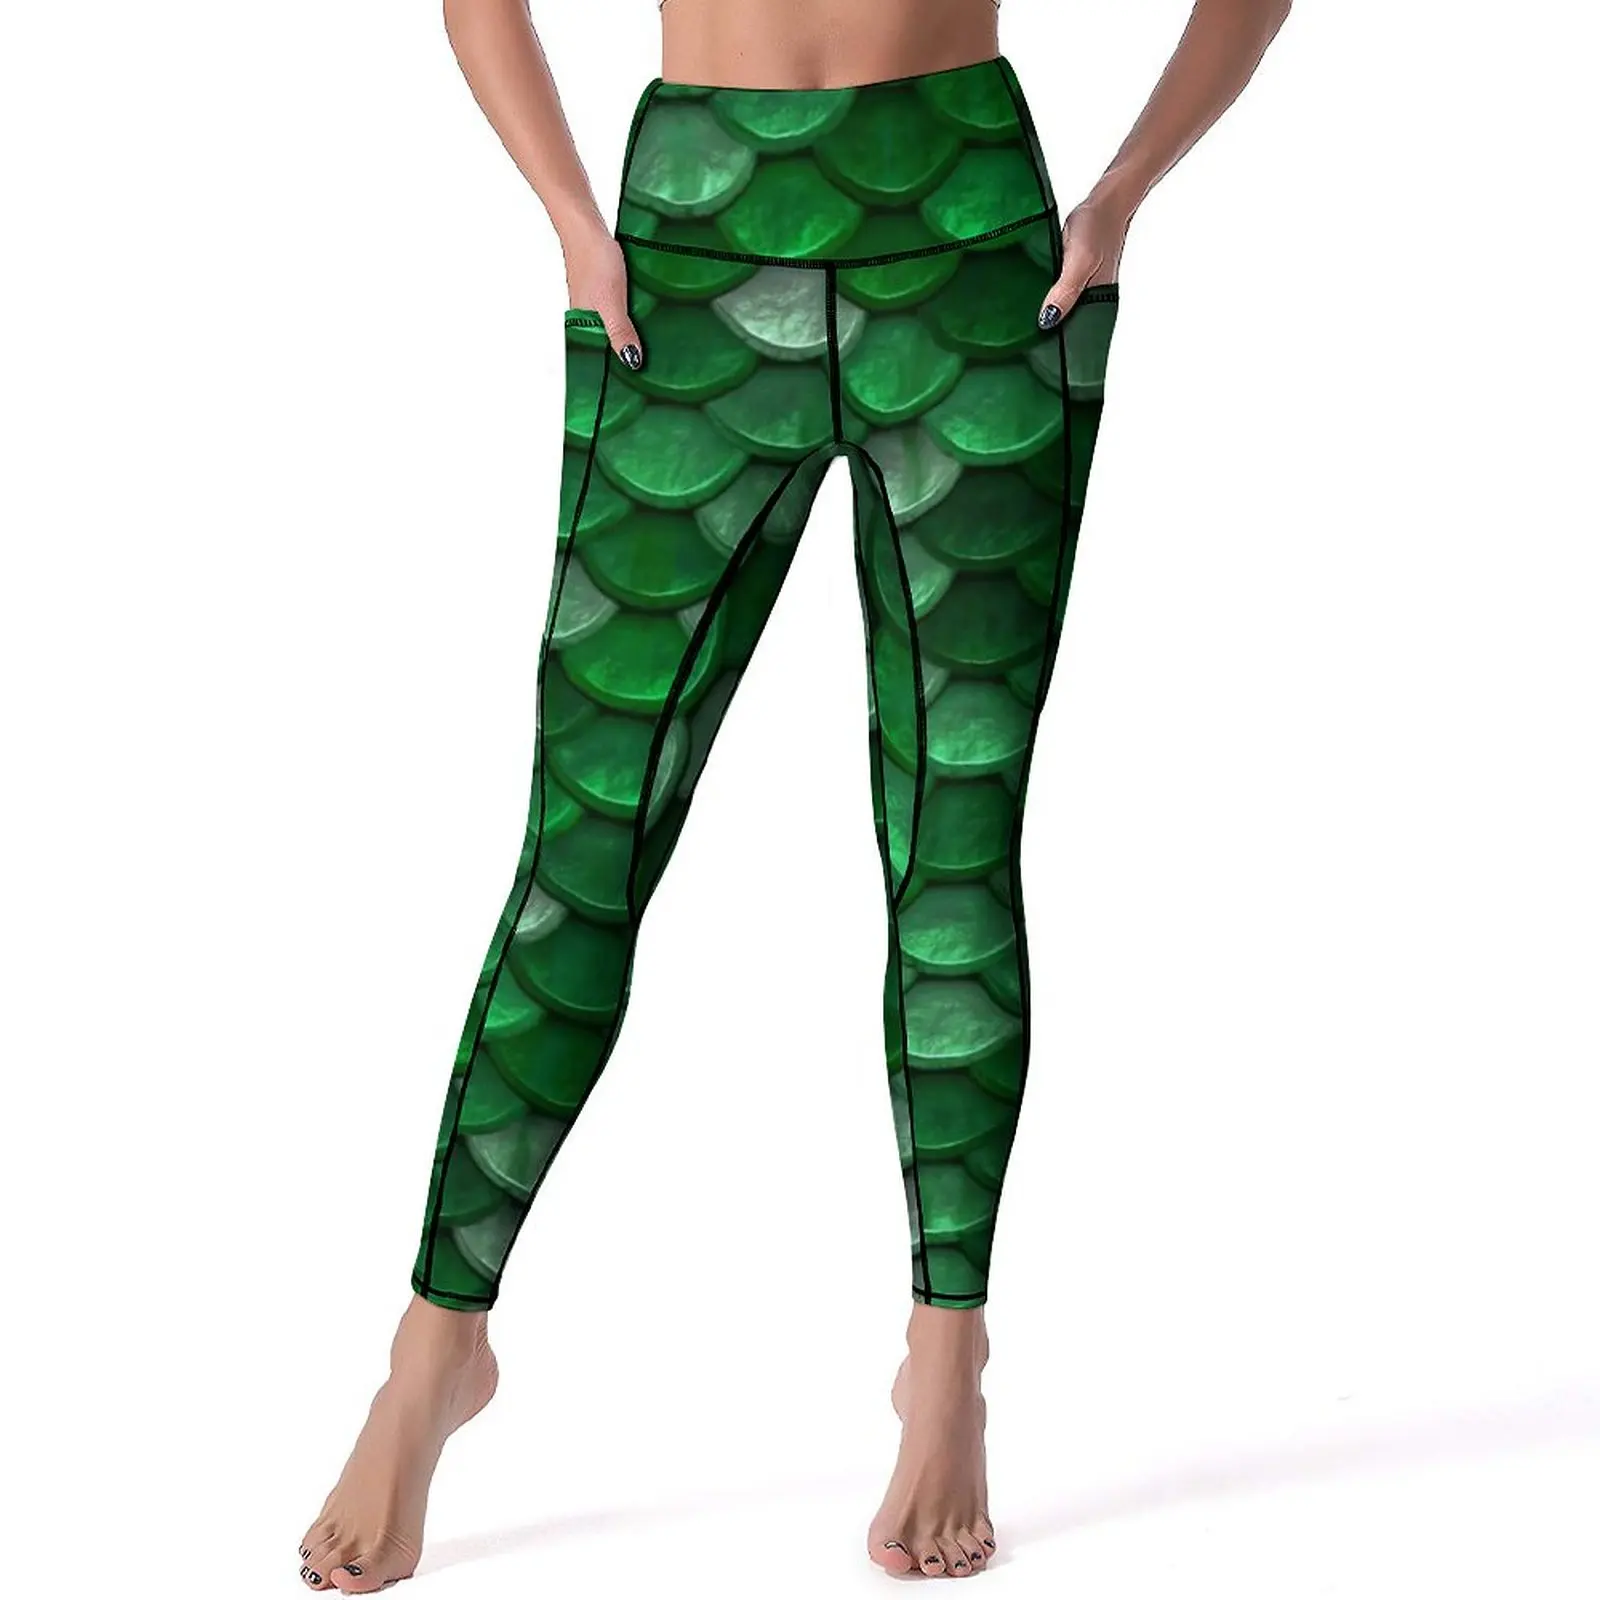 

Green Metallic Leggings Colorful Fish Scales Workout Gym Yoga Pants Push Up Fashion Leggins Stretch Graphic Sport Legging